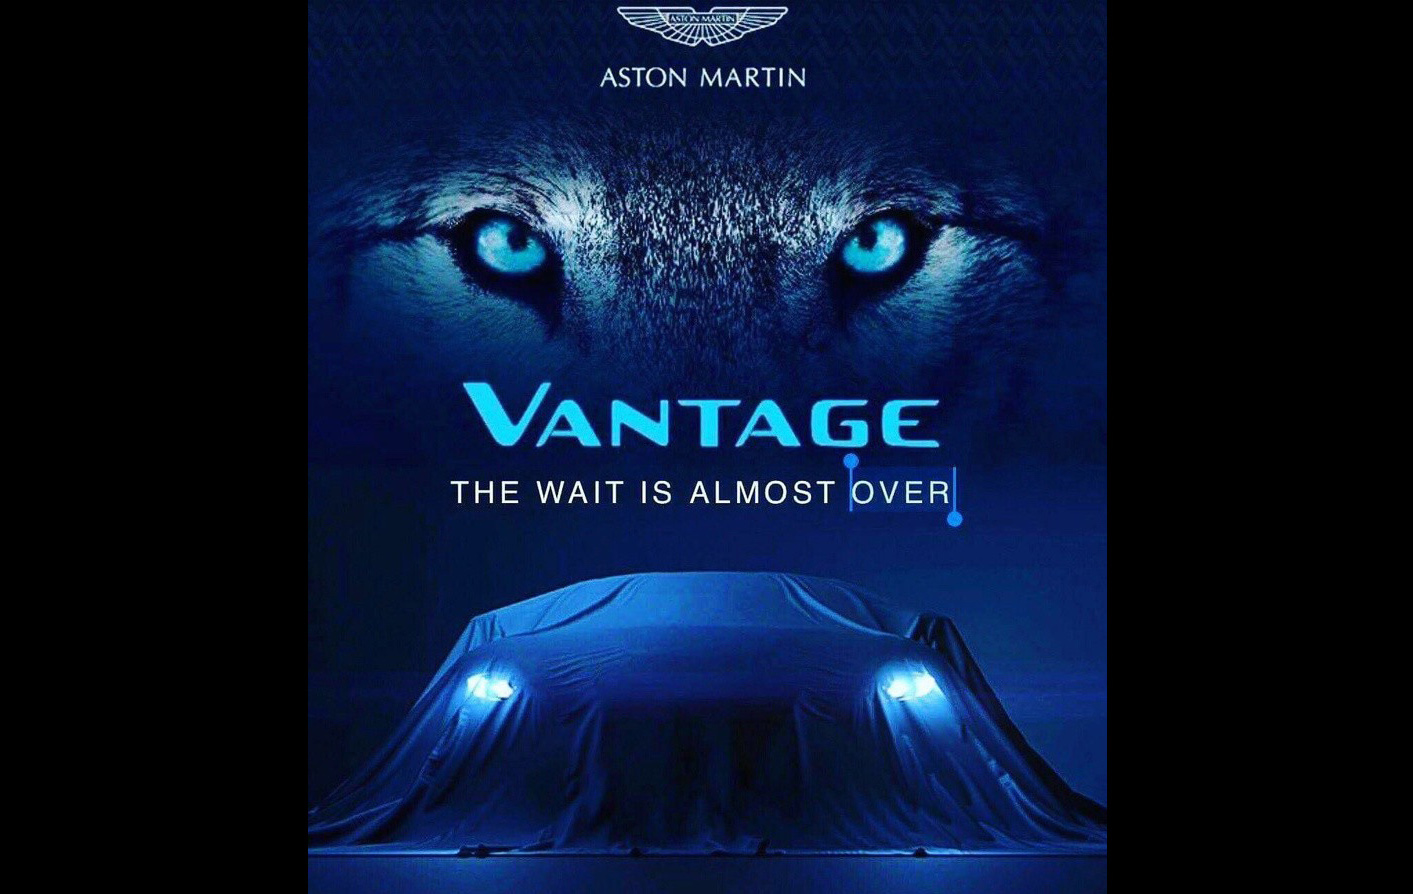 New Aston Martin Vantage debut confirmed for November 21